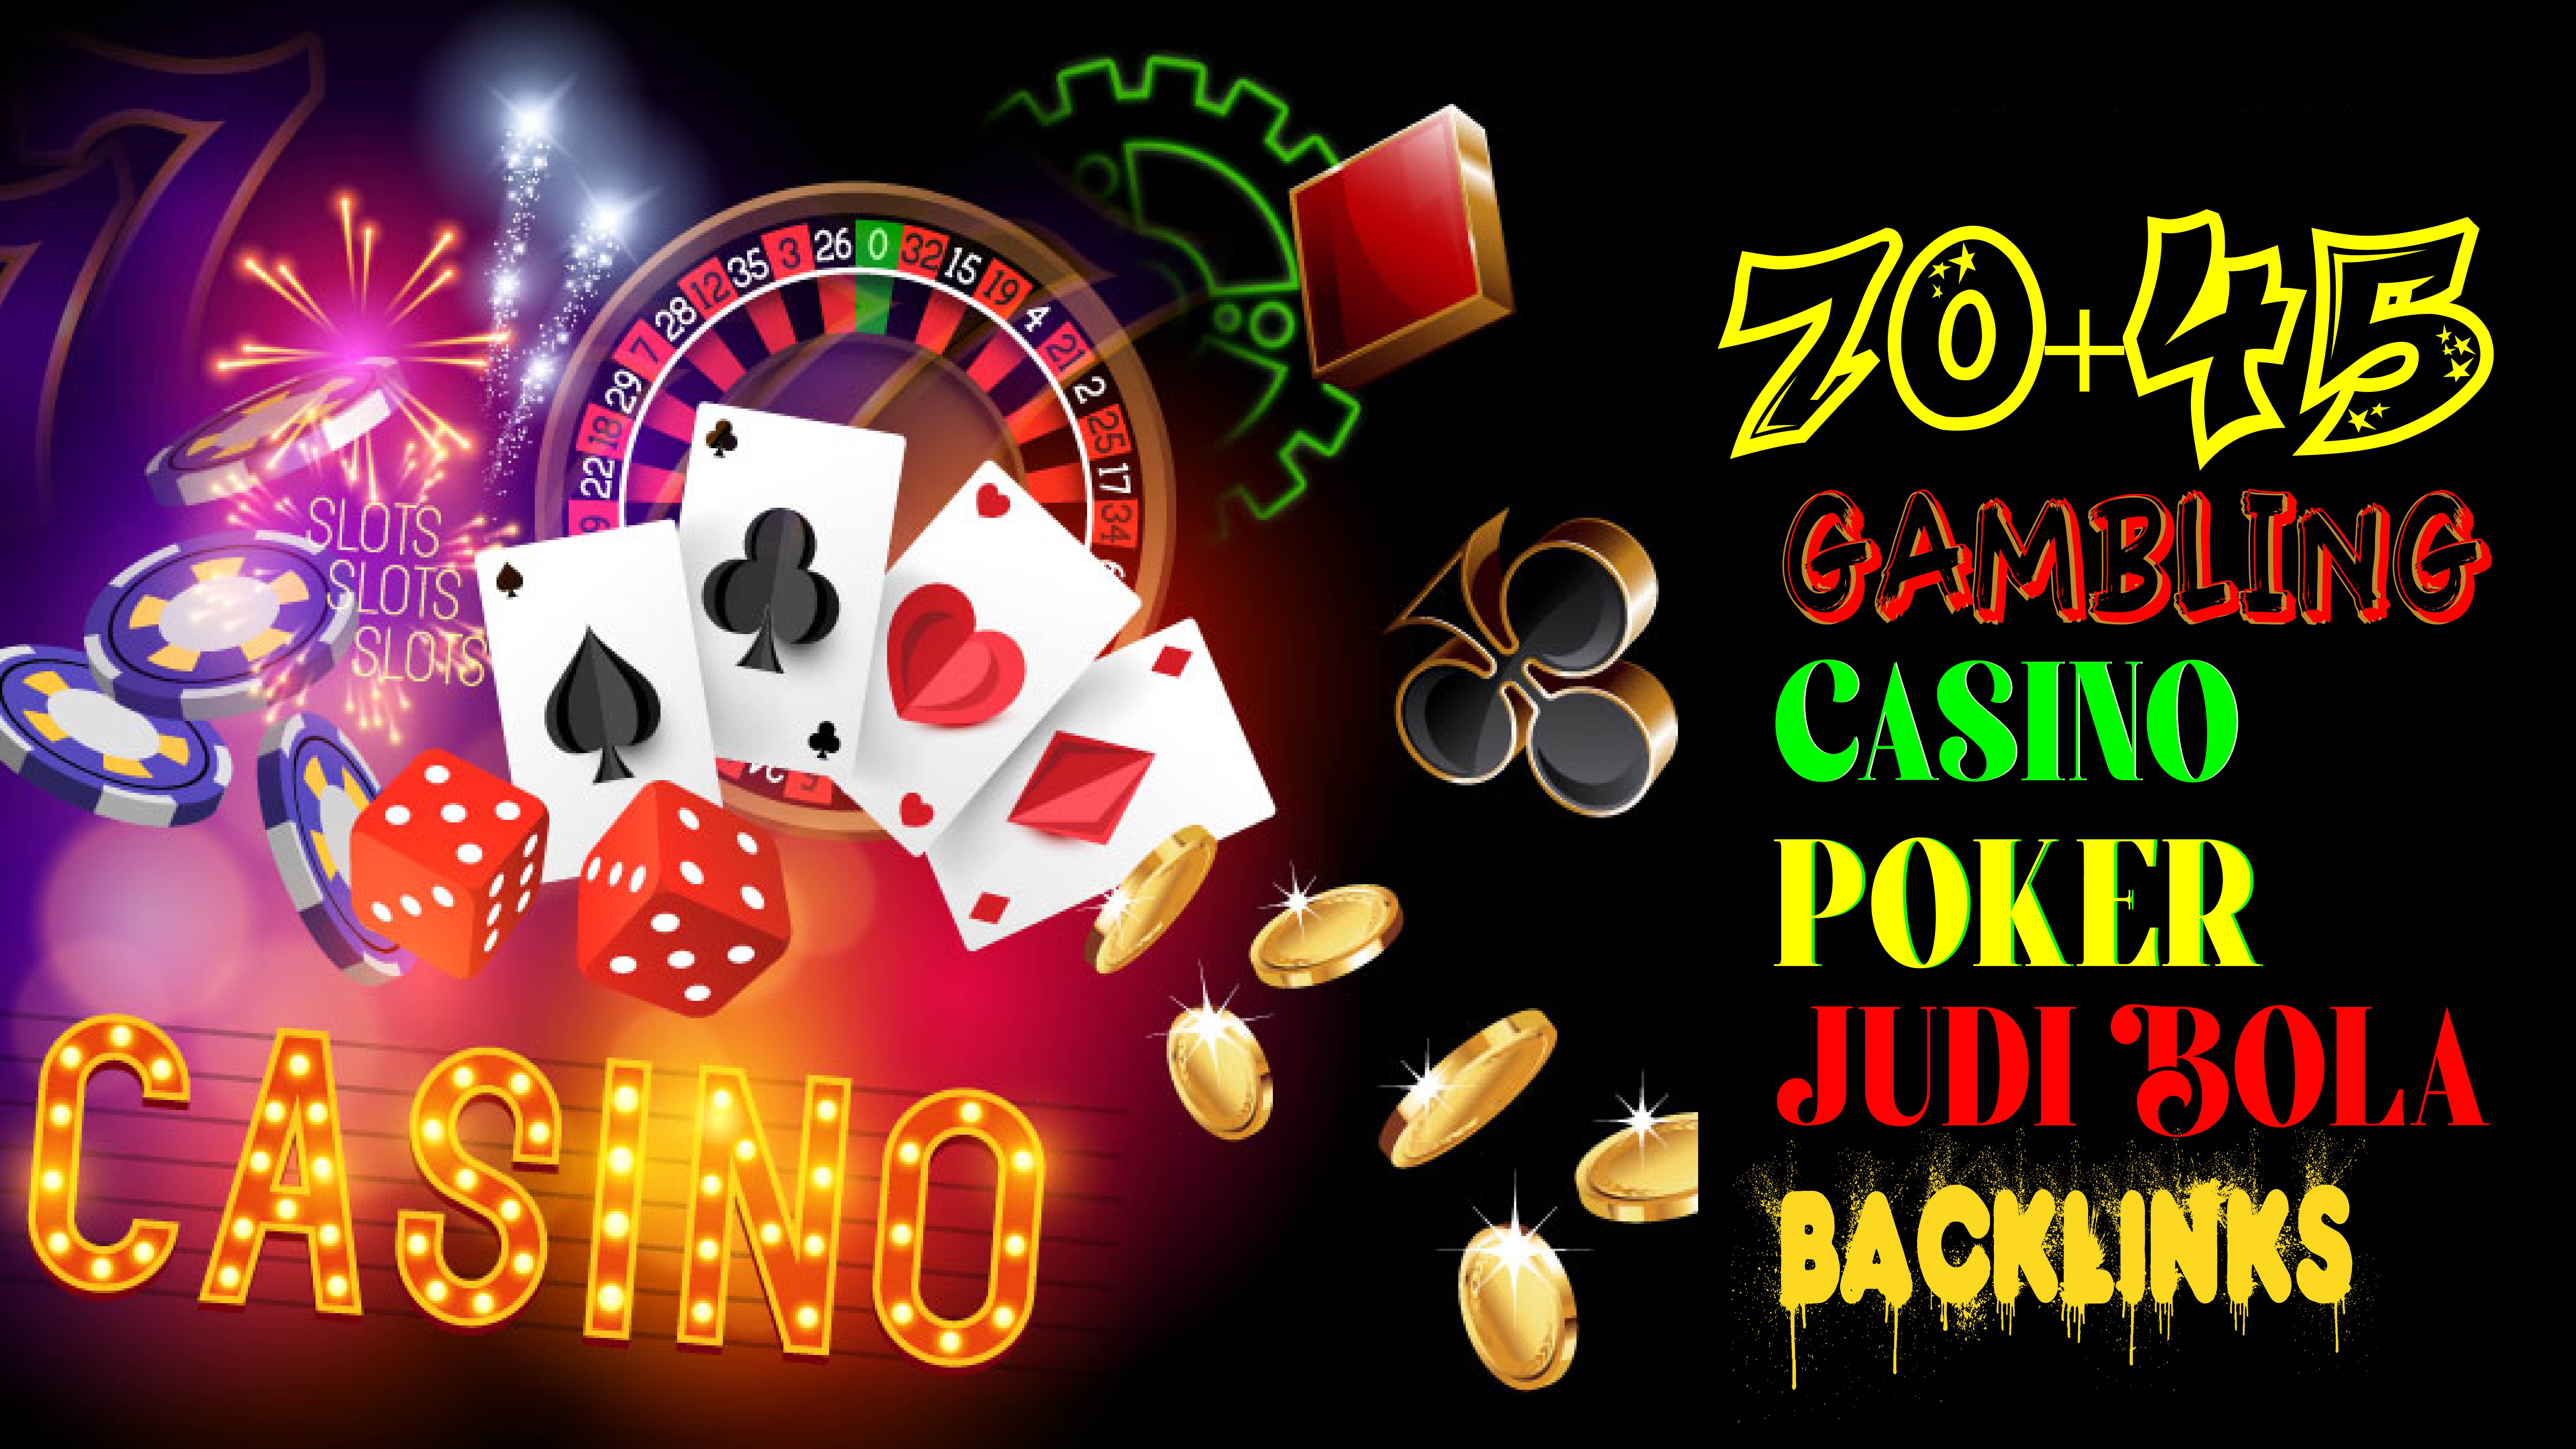 Casino/Poker/judi 70+45 Powerful PBN Backlinks with extremely high Tf Cf Da Pa 